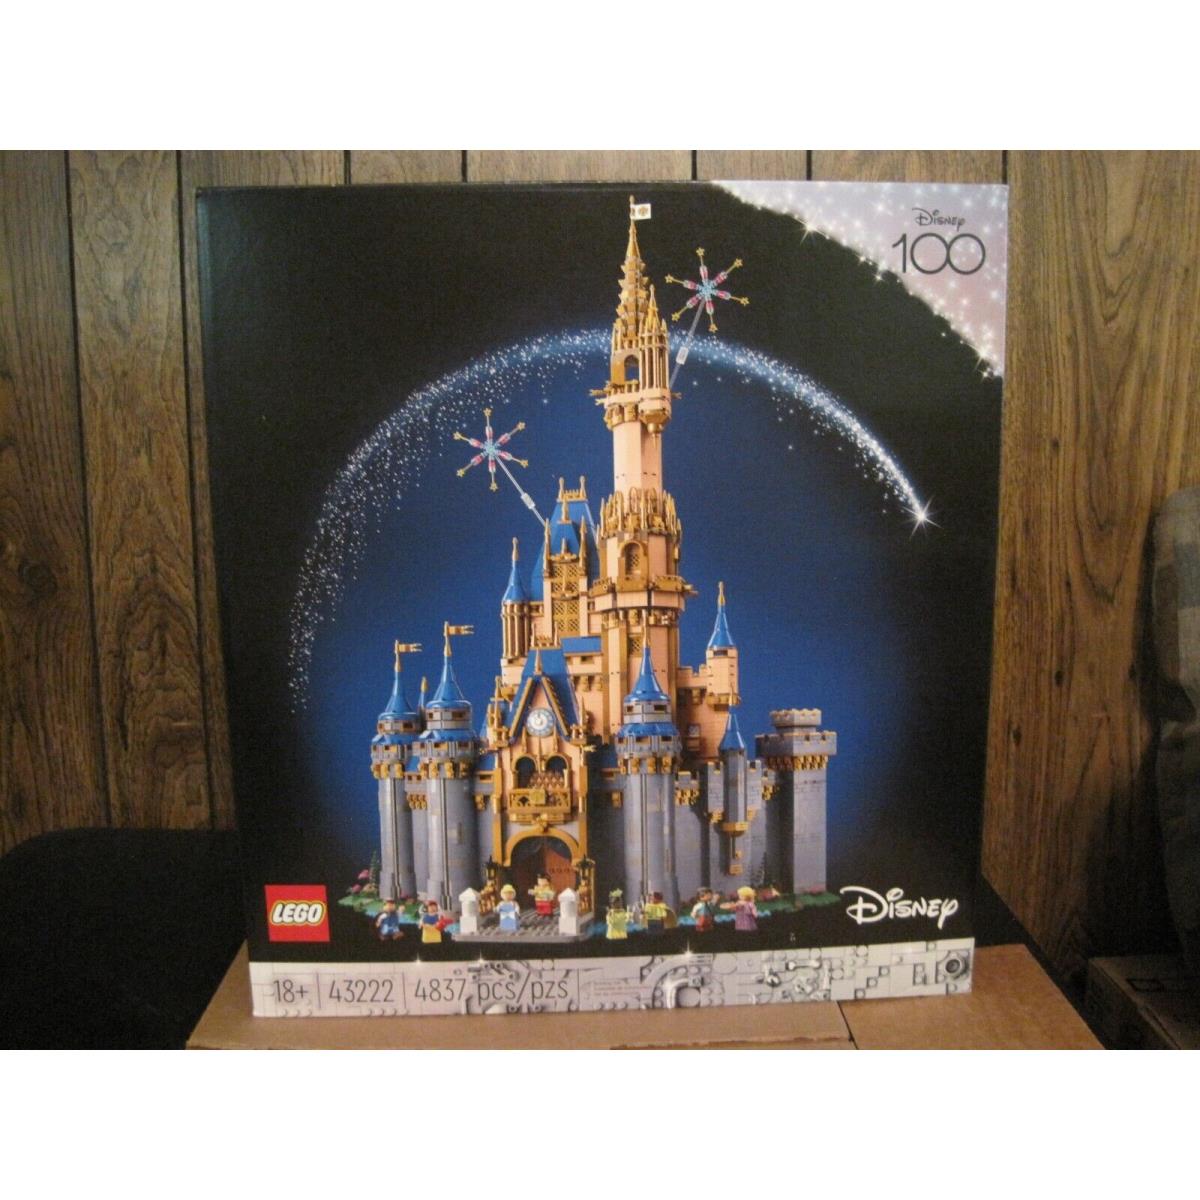 2023 Lego 43222 Disney 100 Years The Disney Castle 4837 Pieces--new